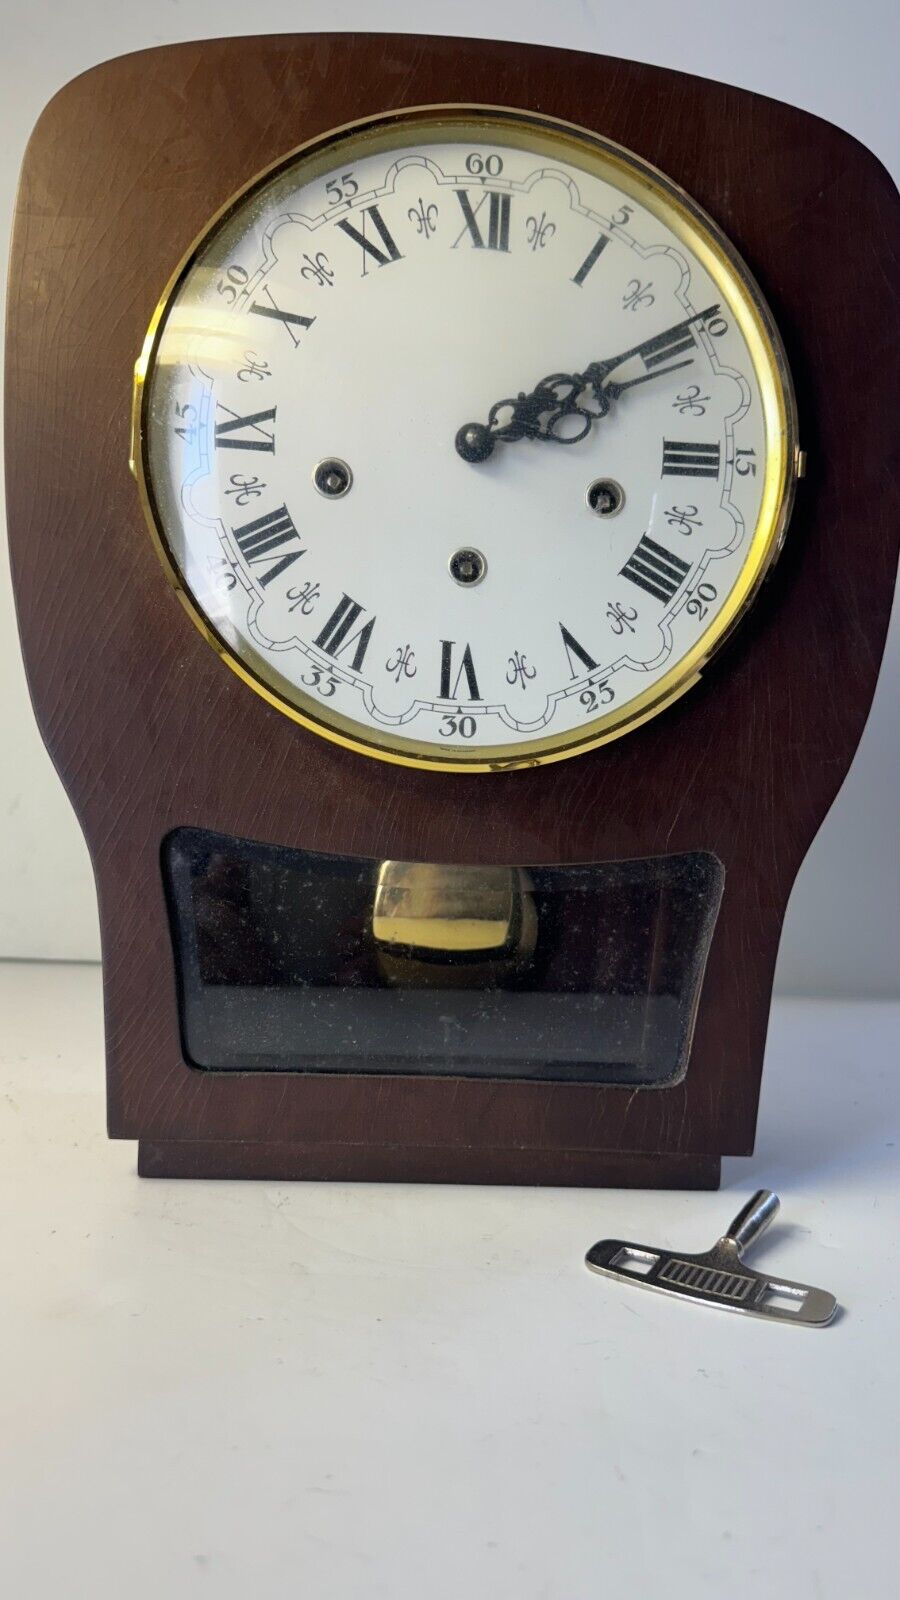 Vintage Mantel or Wall Clock - German Movement - Works keeps good time -